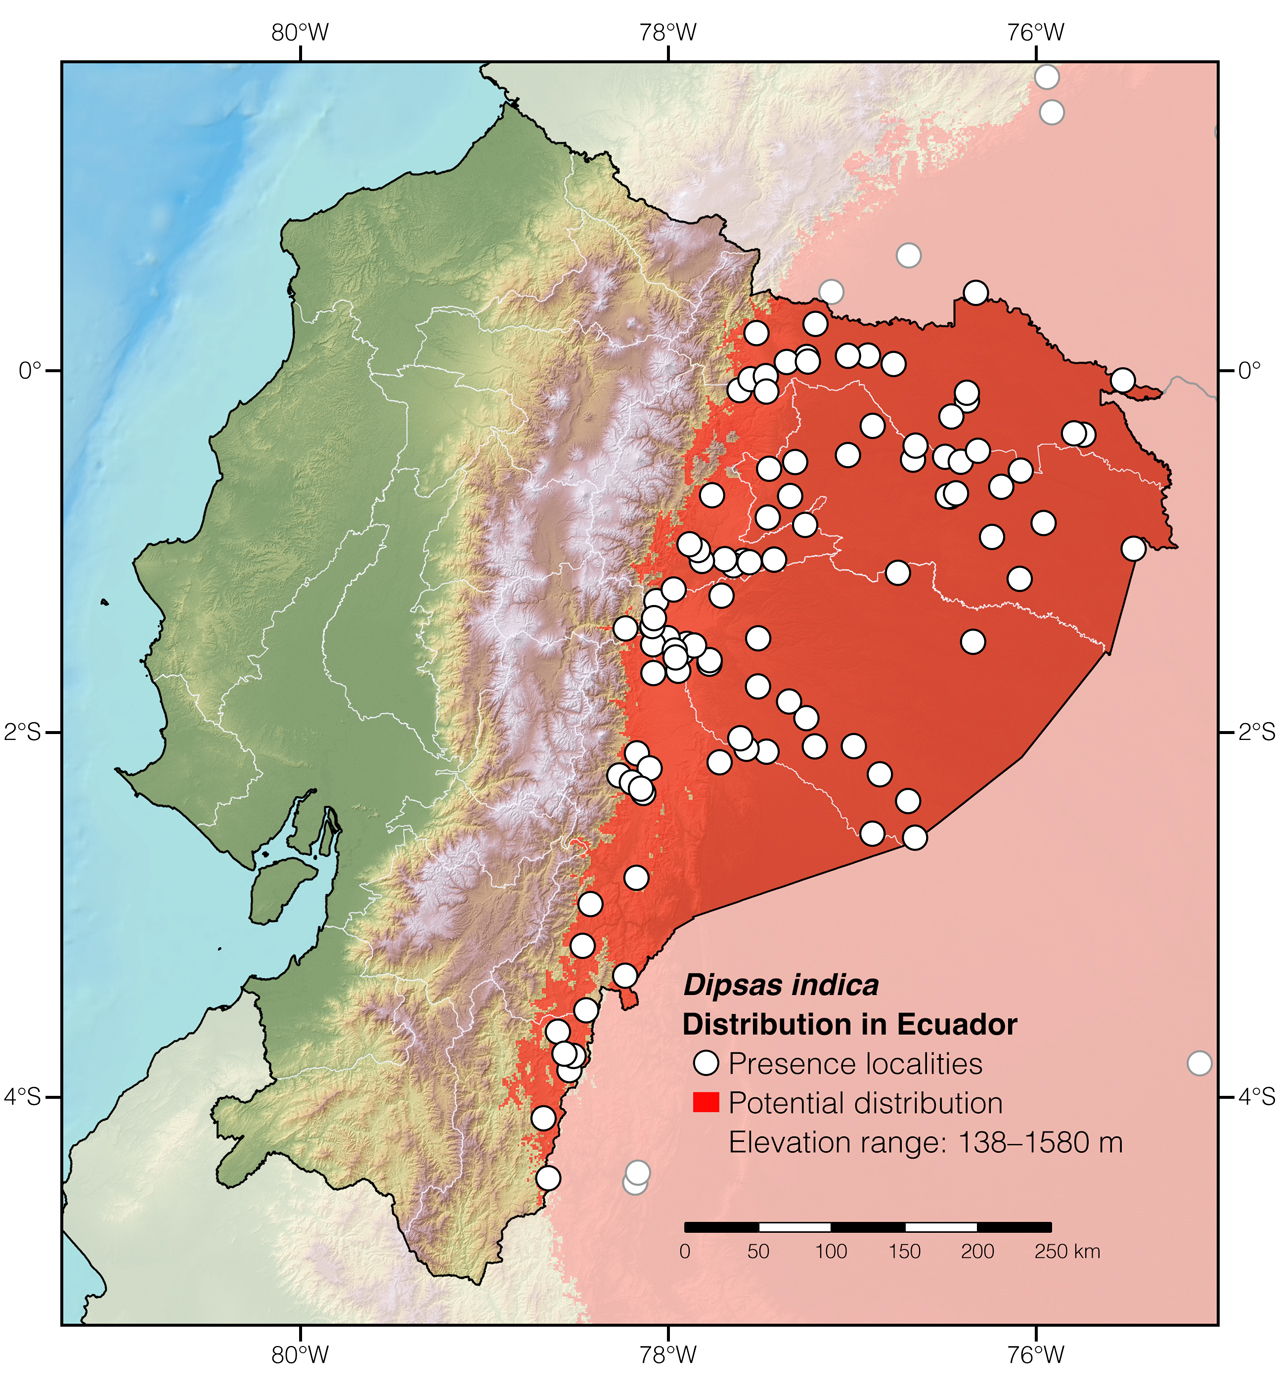 Distribution of Dipsas indica in Ecuador